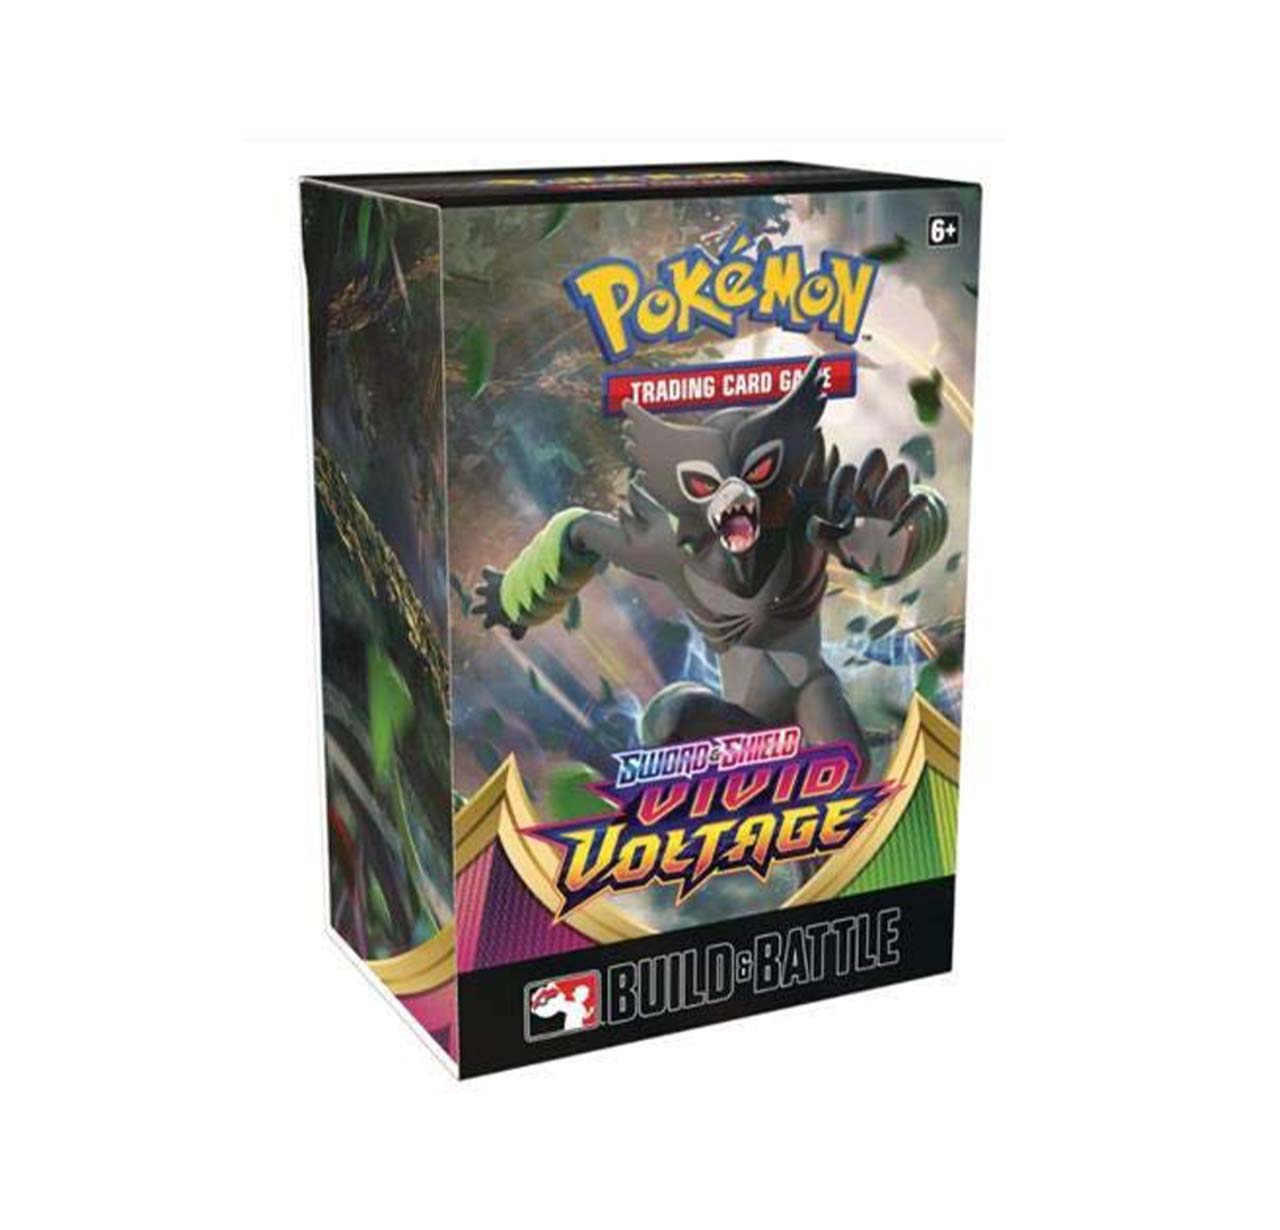 Pokémon TCG Sword & Shield Vivid Voltage Build & Battle Box